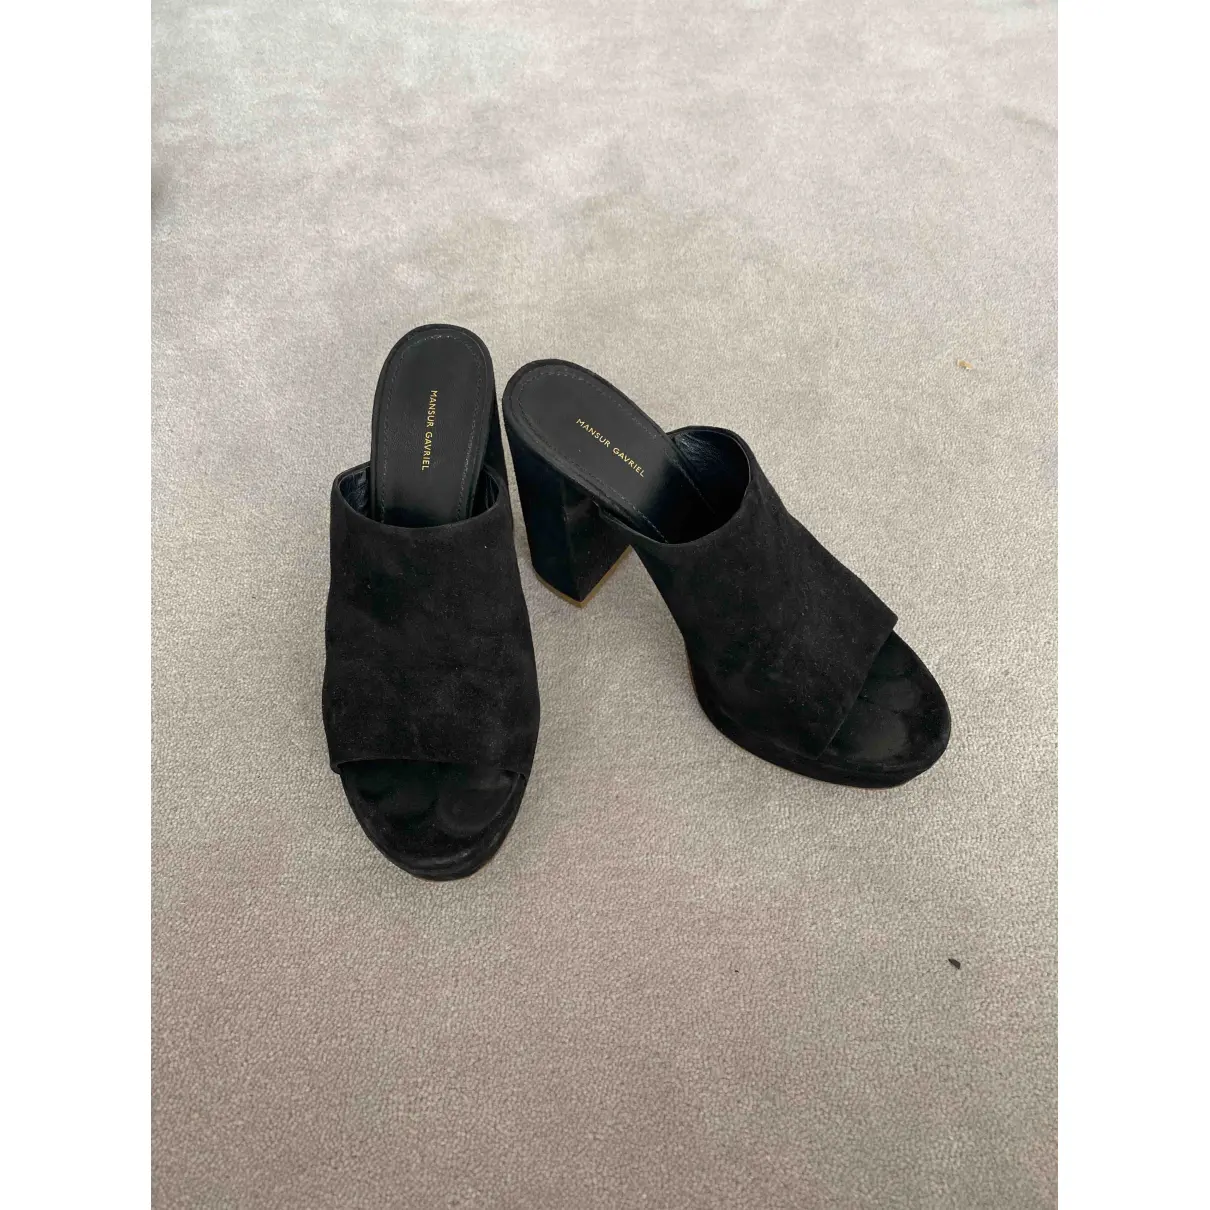 Buy Mansur Gavriel Black Suede Sandals online